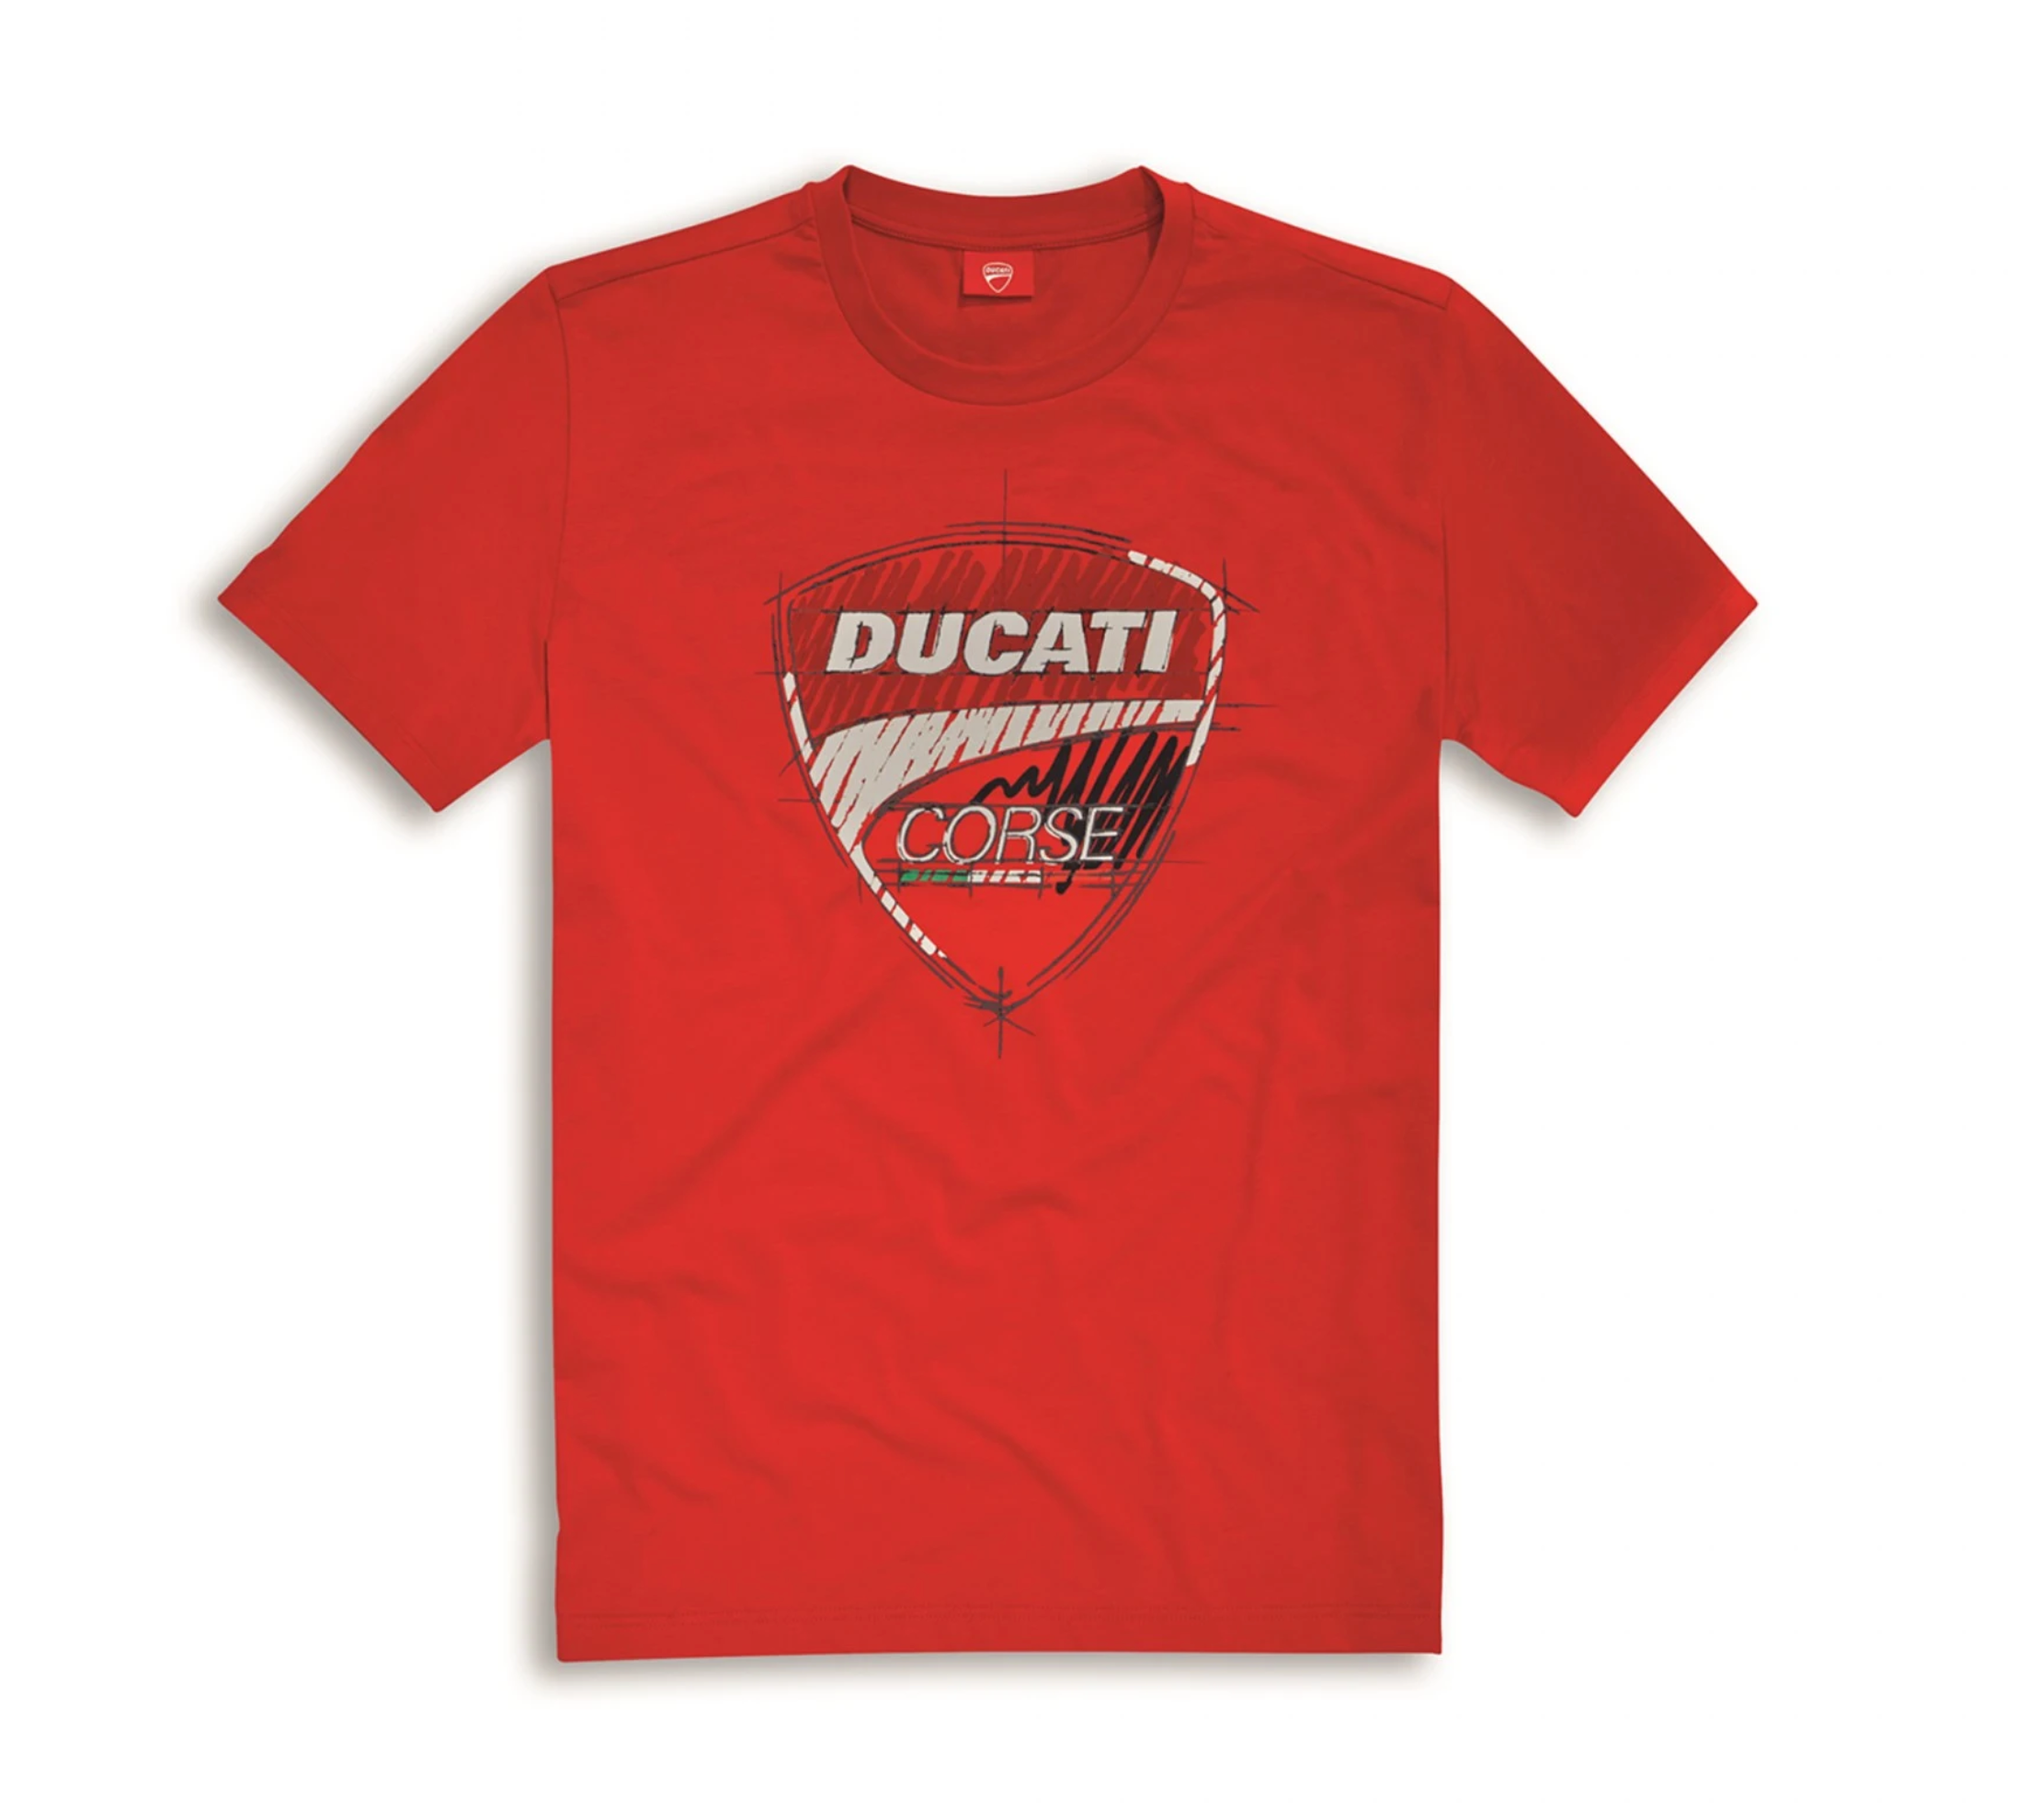 T-shirt Homme Original Ducati Sketch DC 2.0 Blanc 98770566